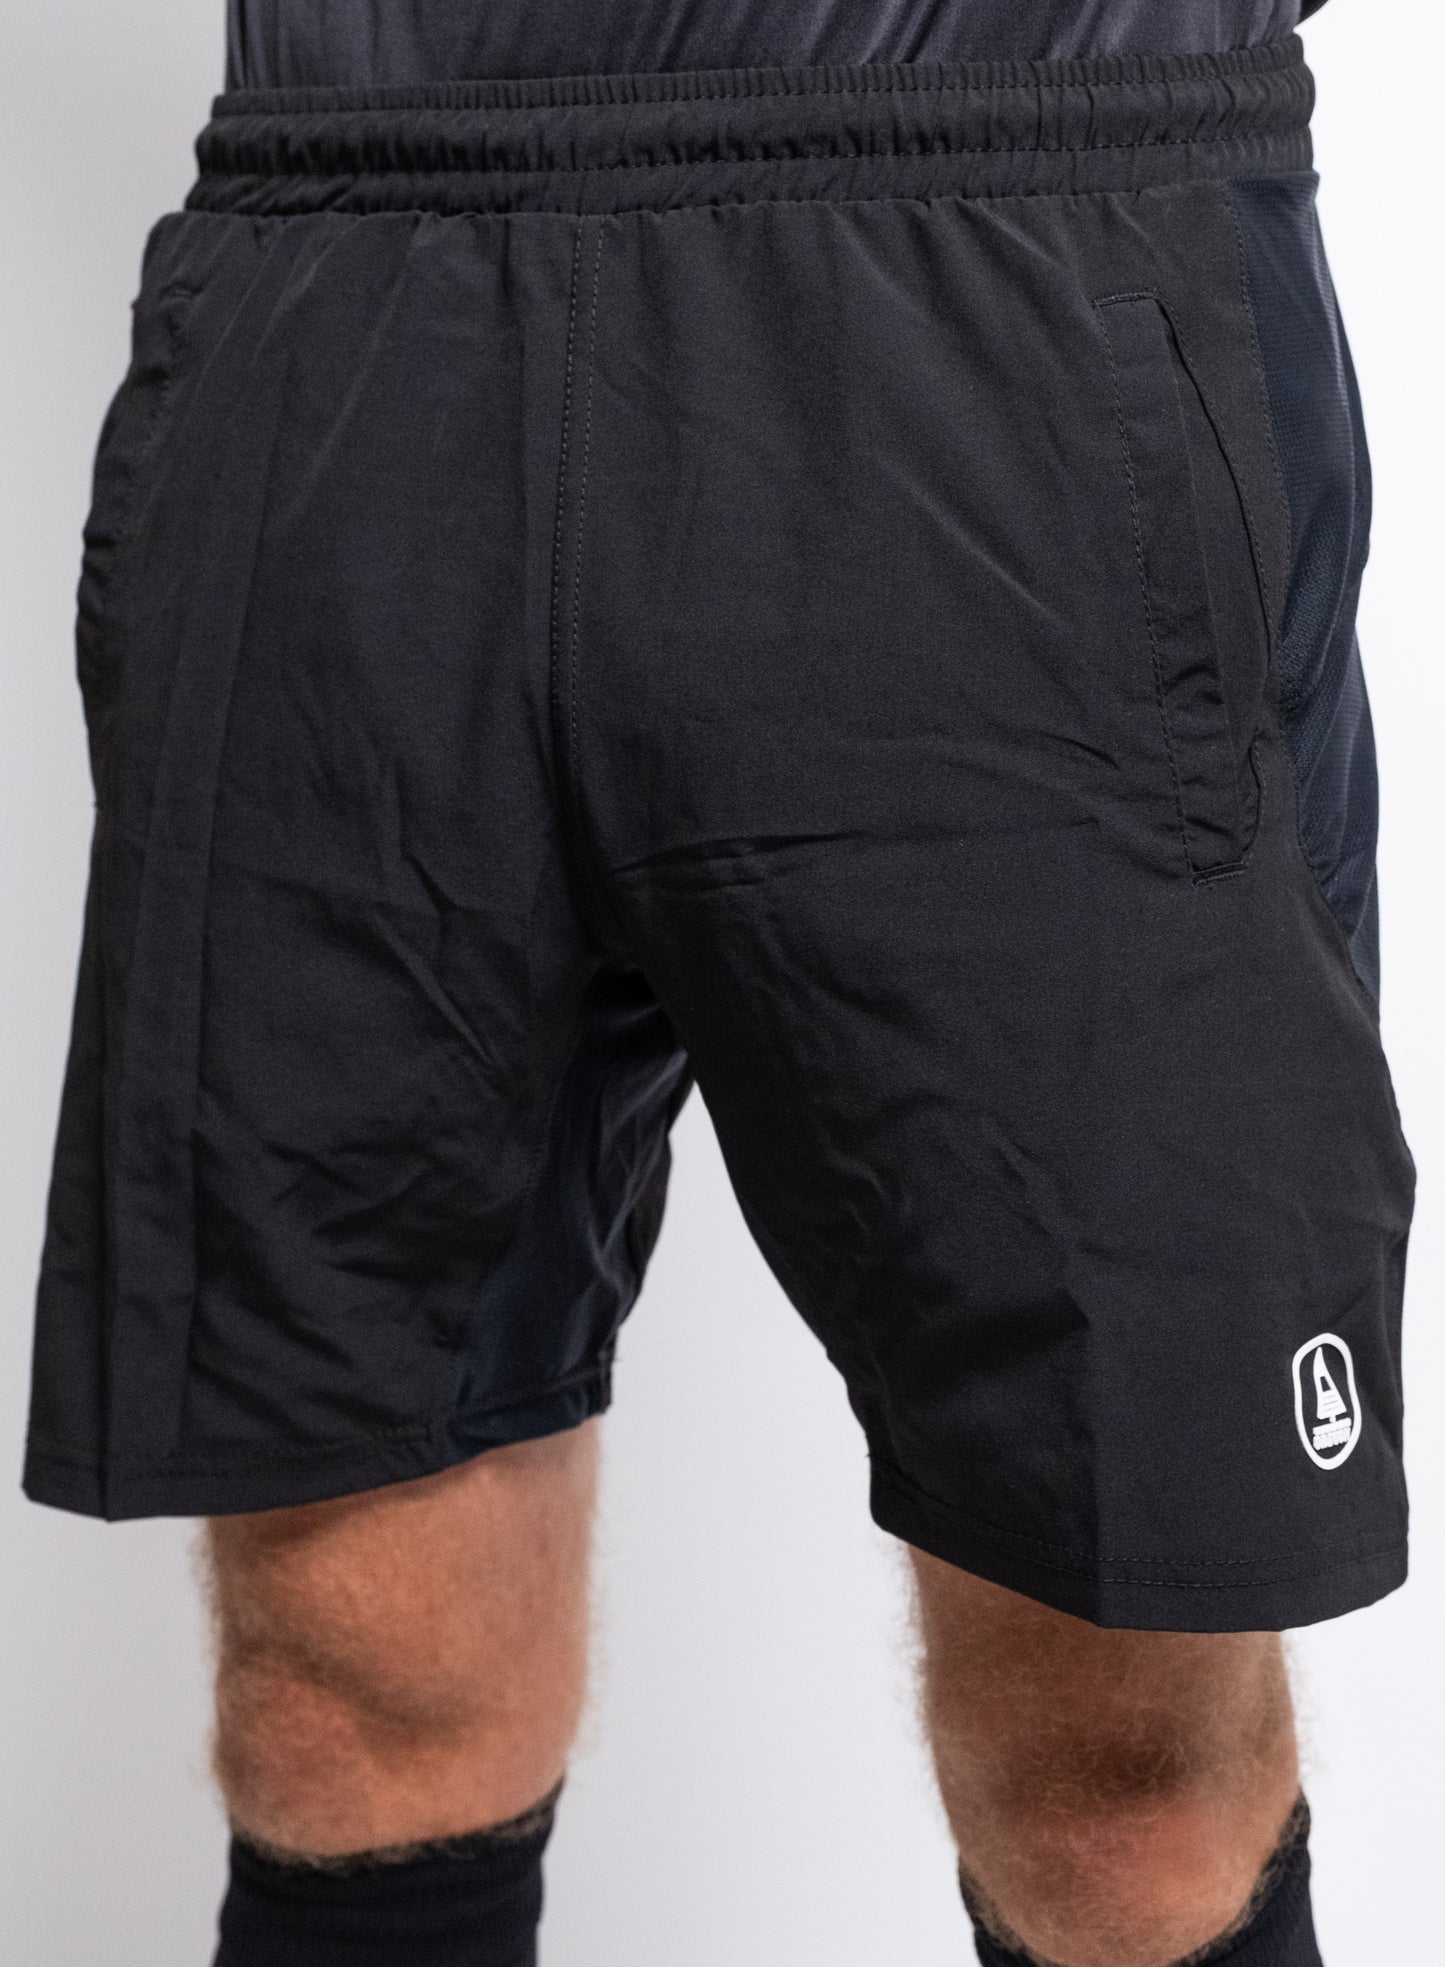 Authentic Shorts